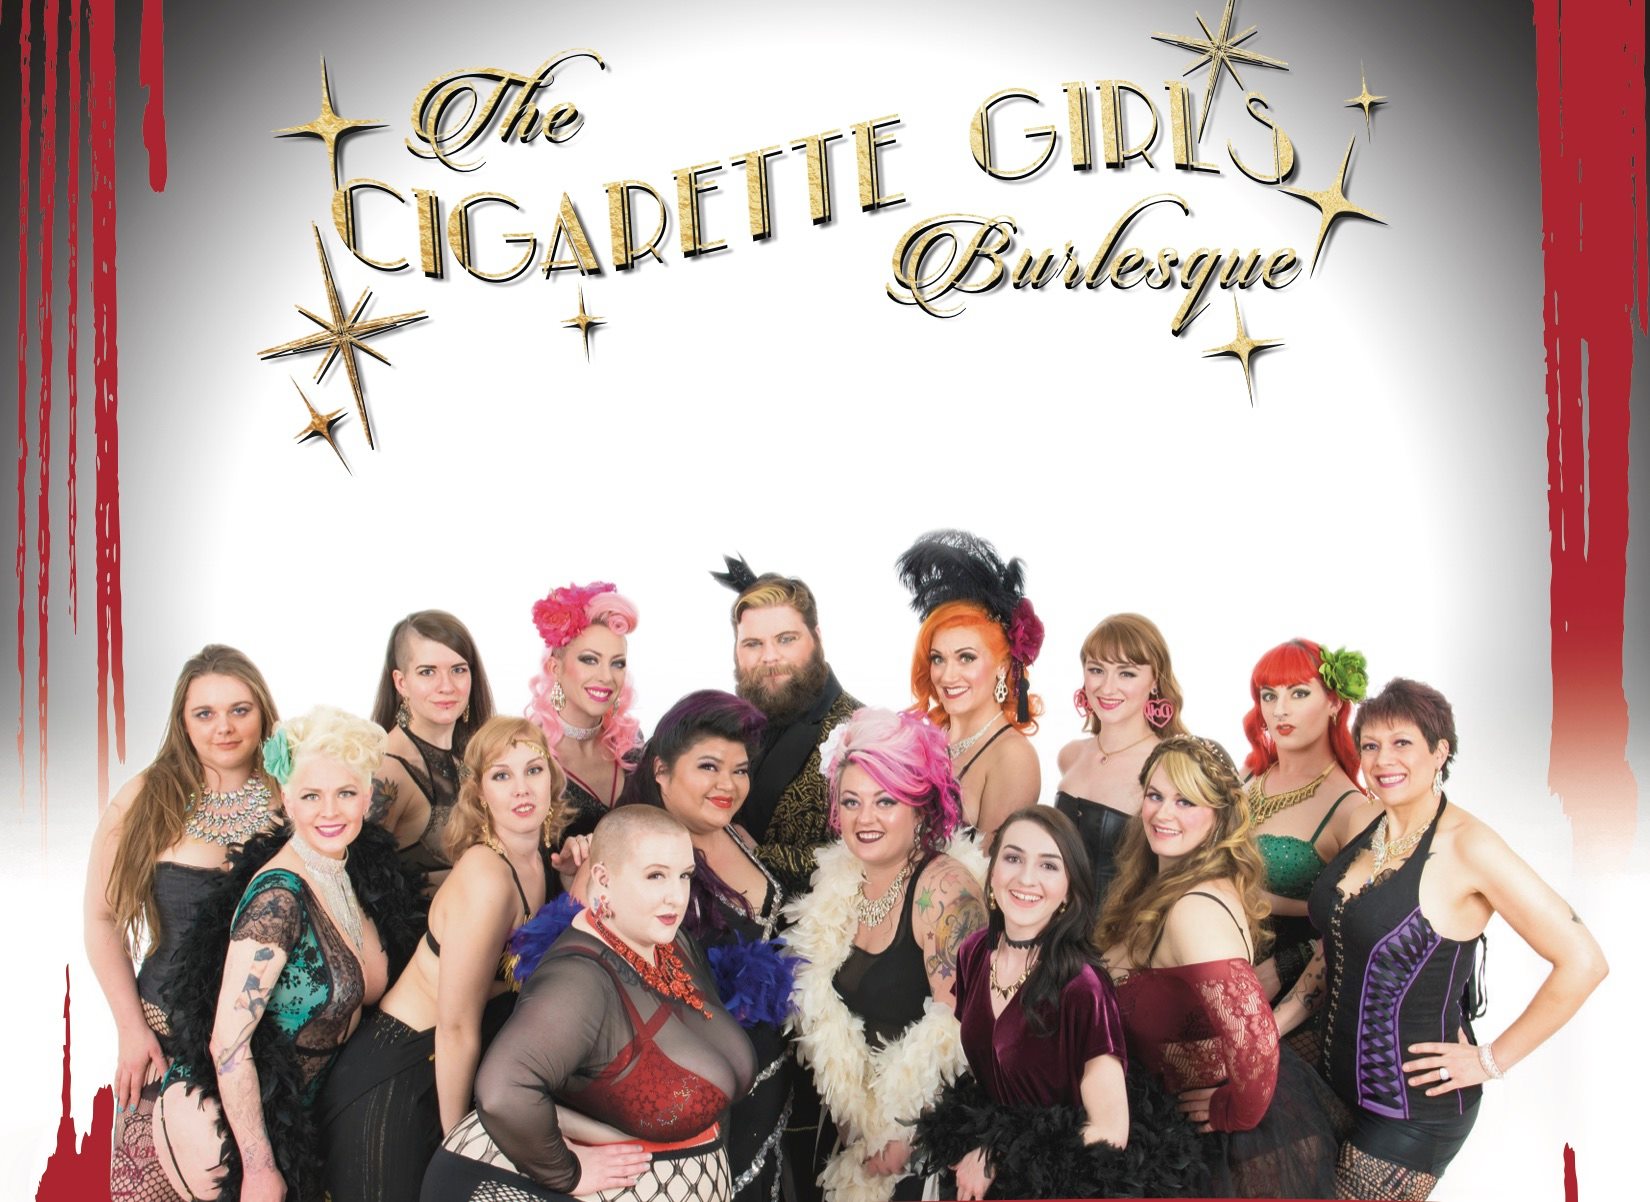 The Cigarette Girls Burlesque